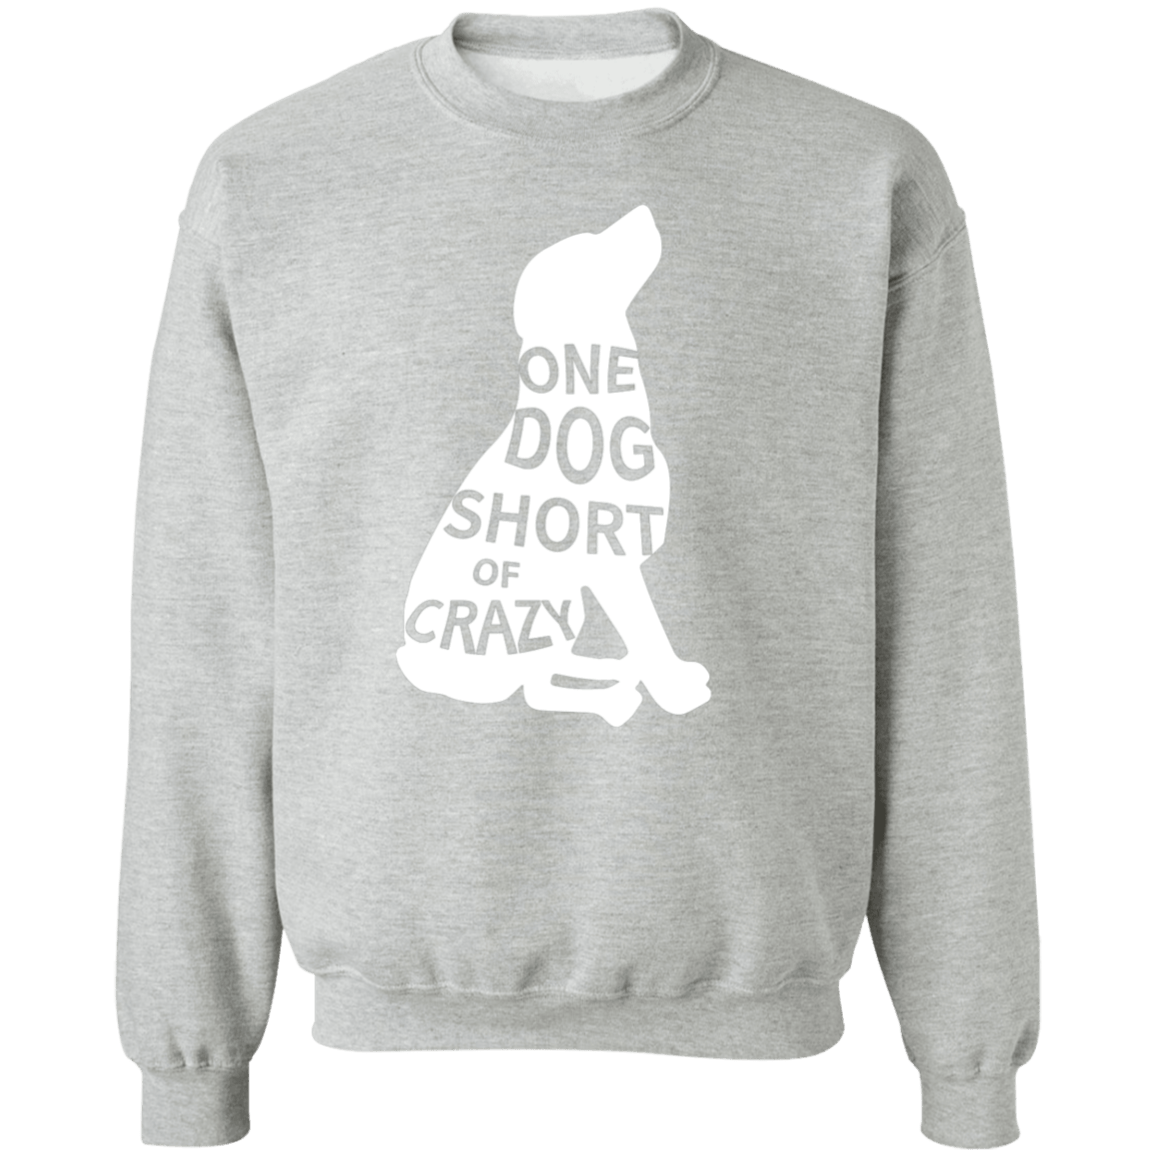 One Dog Short Of Crazy - Sweatshirt.